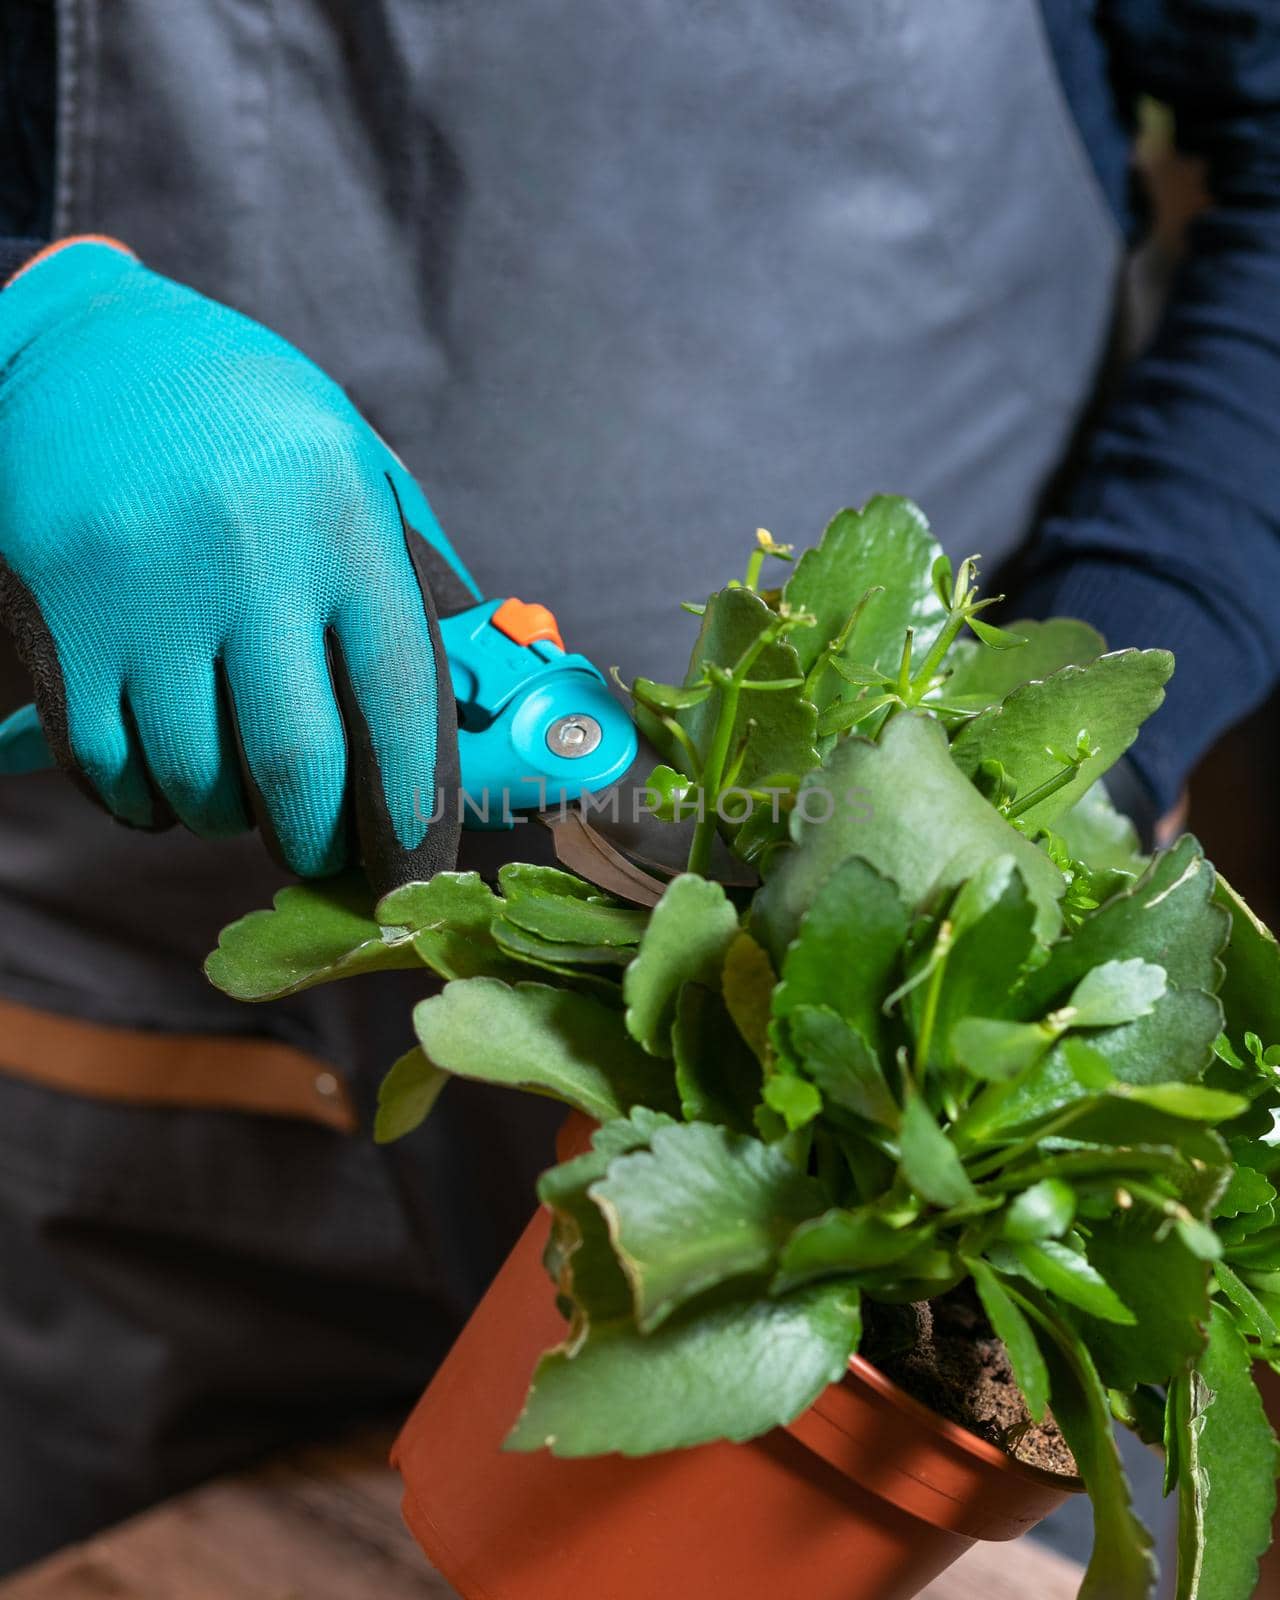 Gardener man cutting Widow's-thrill, Kalanchoe plant with garden scissors and gloves